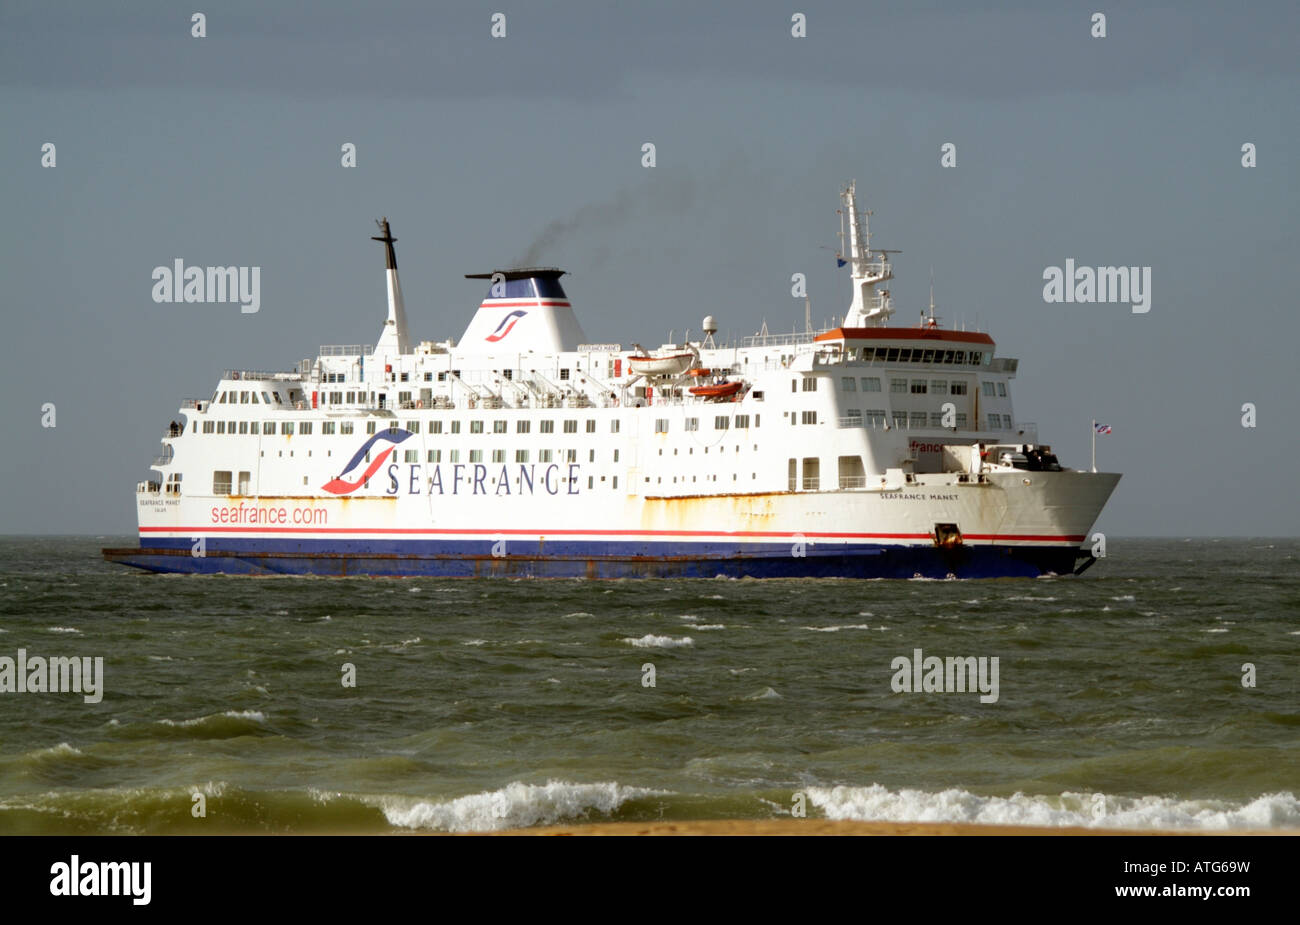 seafrance company ship manet enters Port of calais France Stock Photo